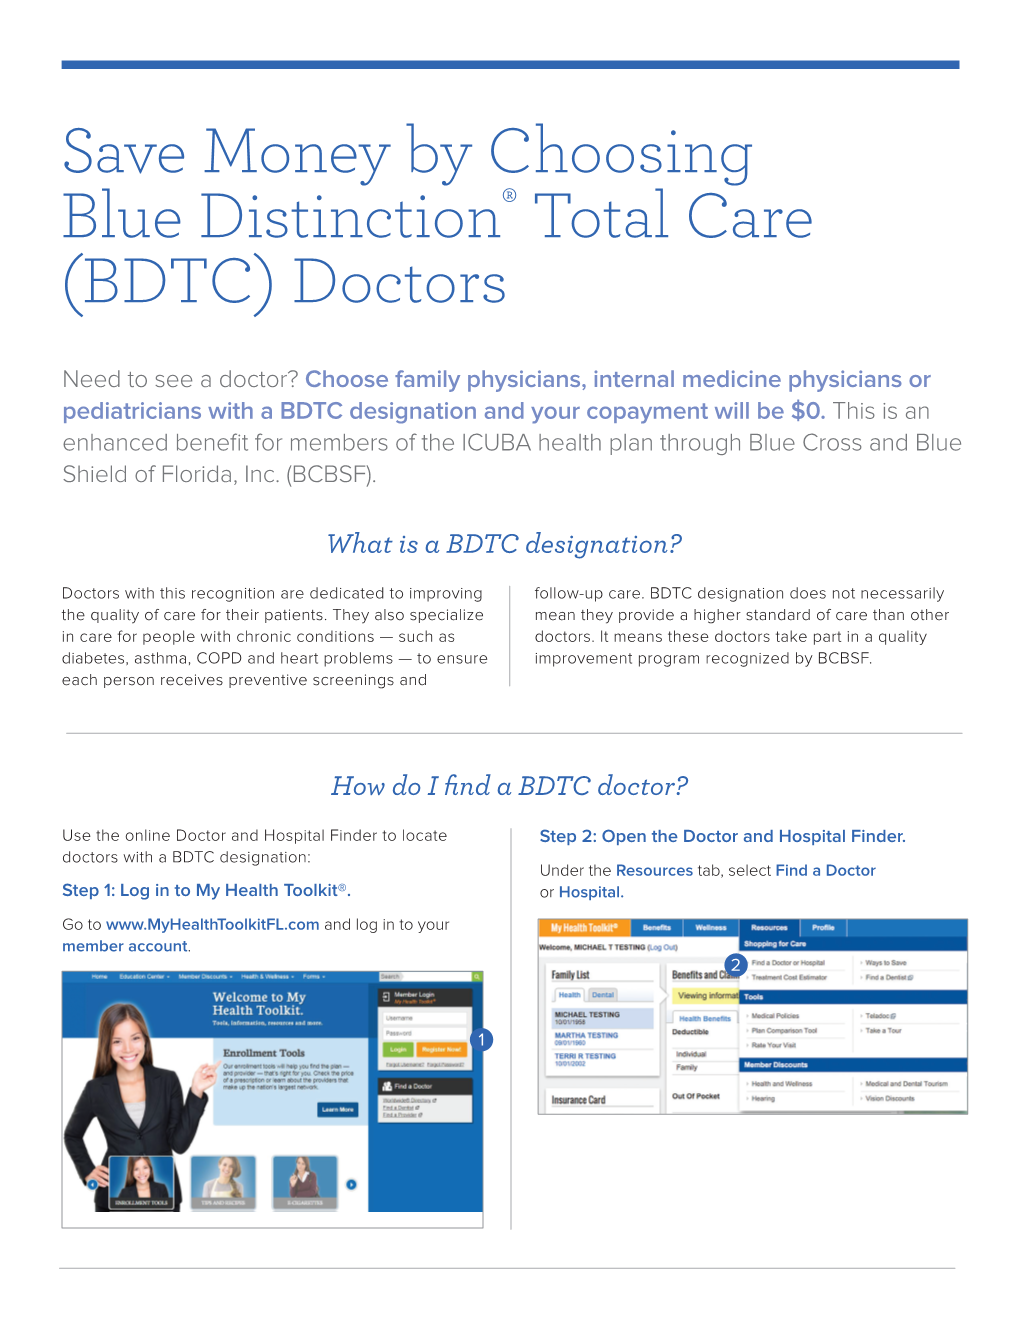 Save Money by Choosing Blue Distinction® Total Care (BDTC) Doctors